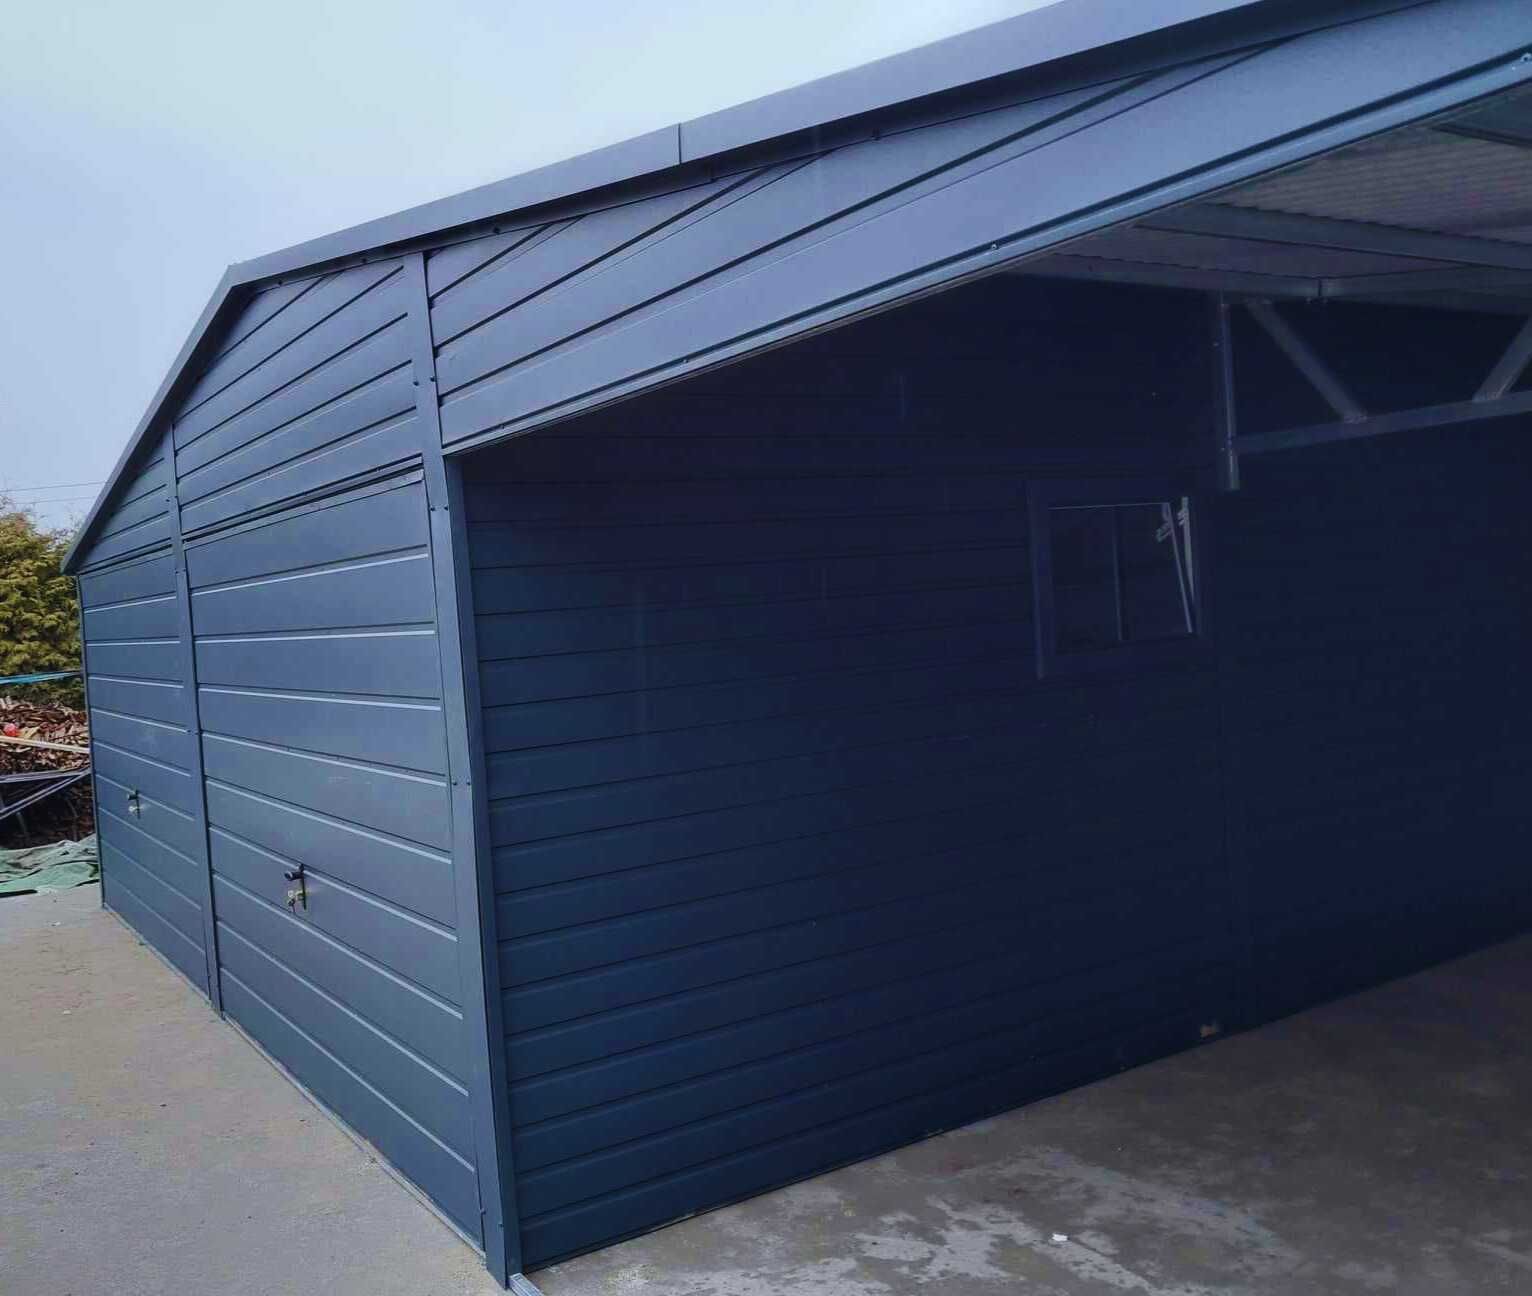 Garaż blaszany 9x5m garaz domek wiata grafit (10x6 11x5 12x8 blaszak)